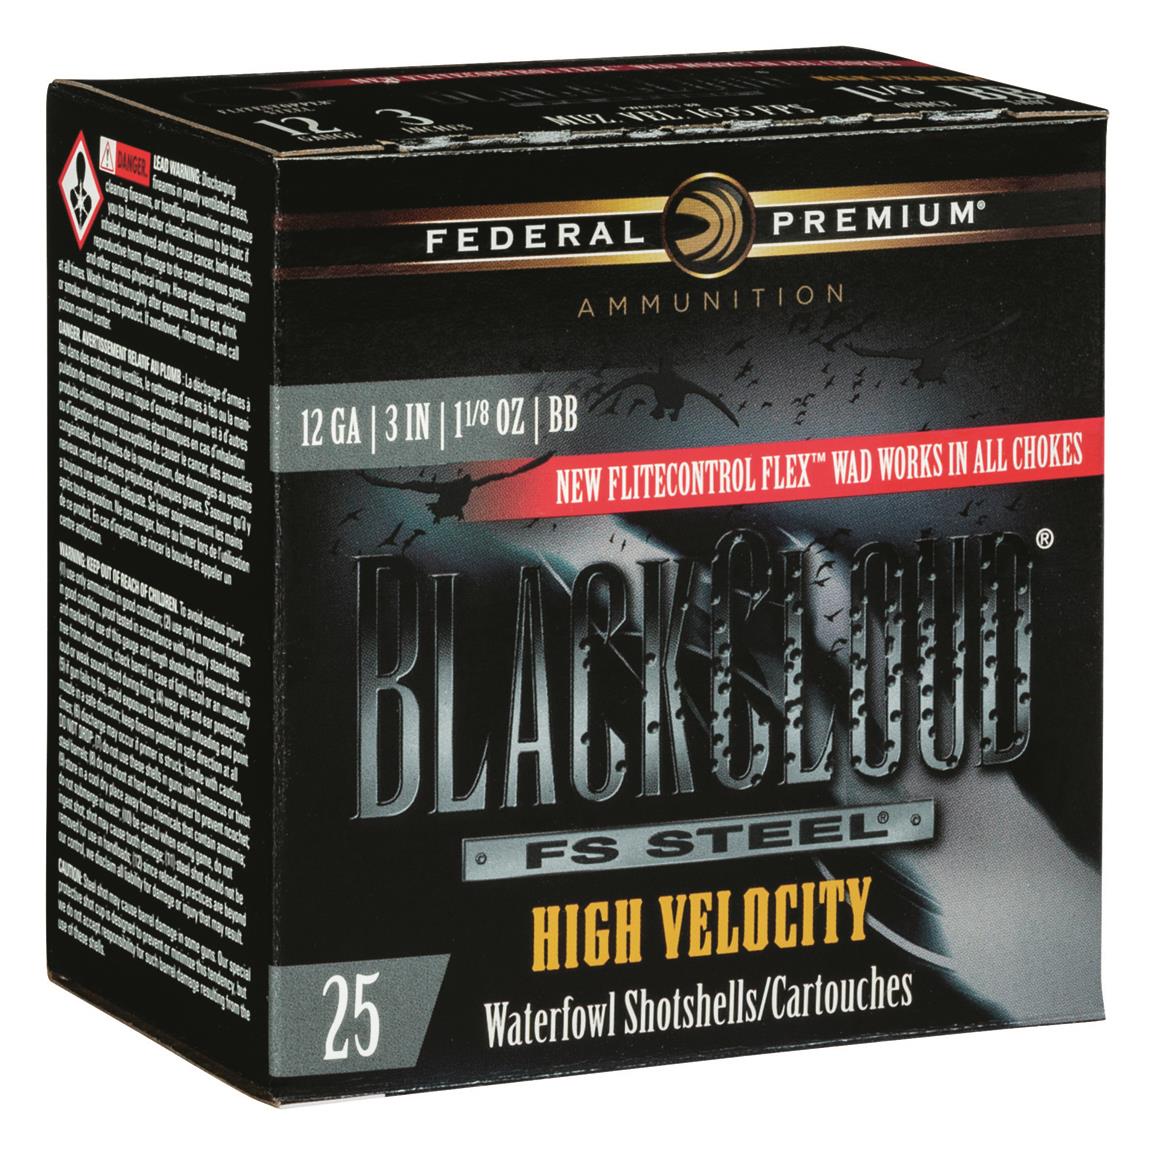 Federal Premium Black Cloud FS Steel High Velocity, 12 Gauge, 3",1 1/8 oz., 250 Rounds